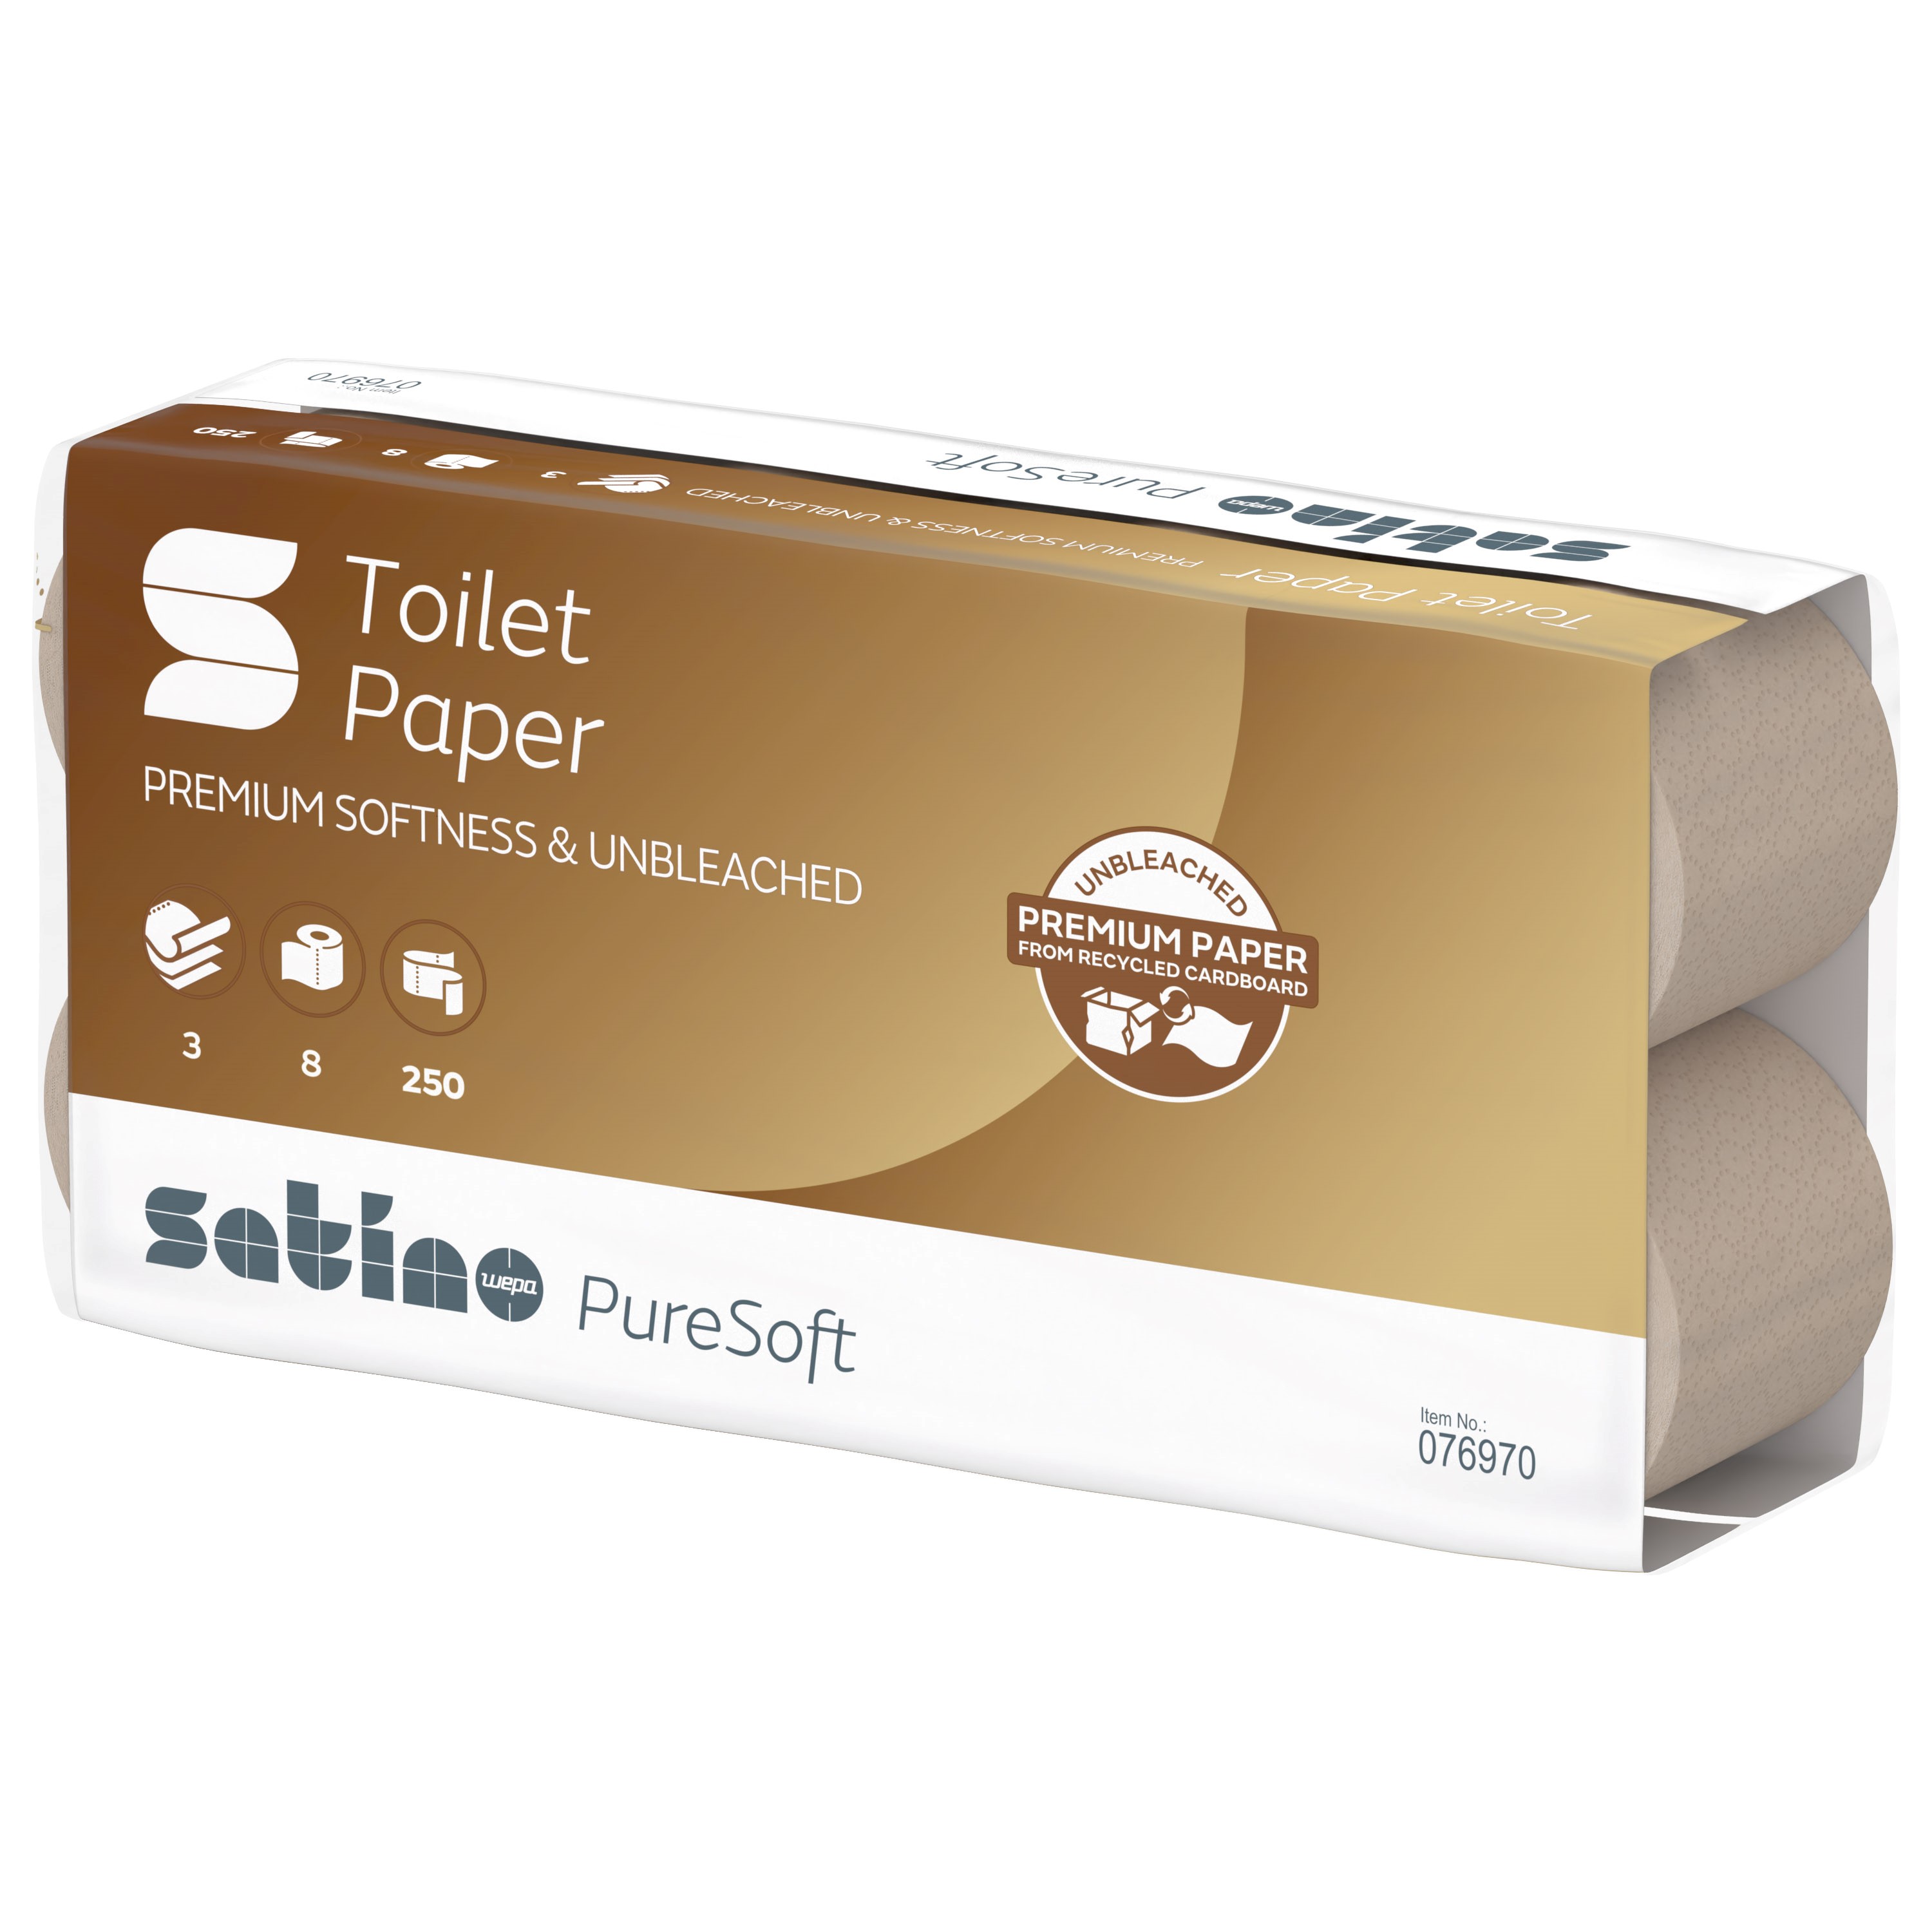 Produktbild: Toilettenpapier 3lg soft beige RC satino PureSoft 64x250 Blatt (Sack)